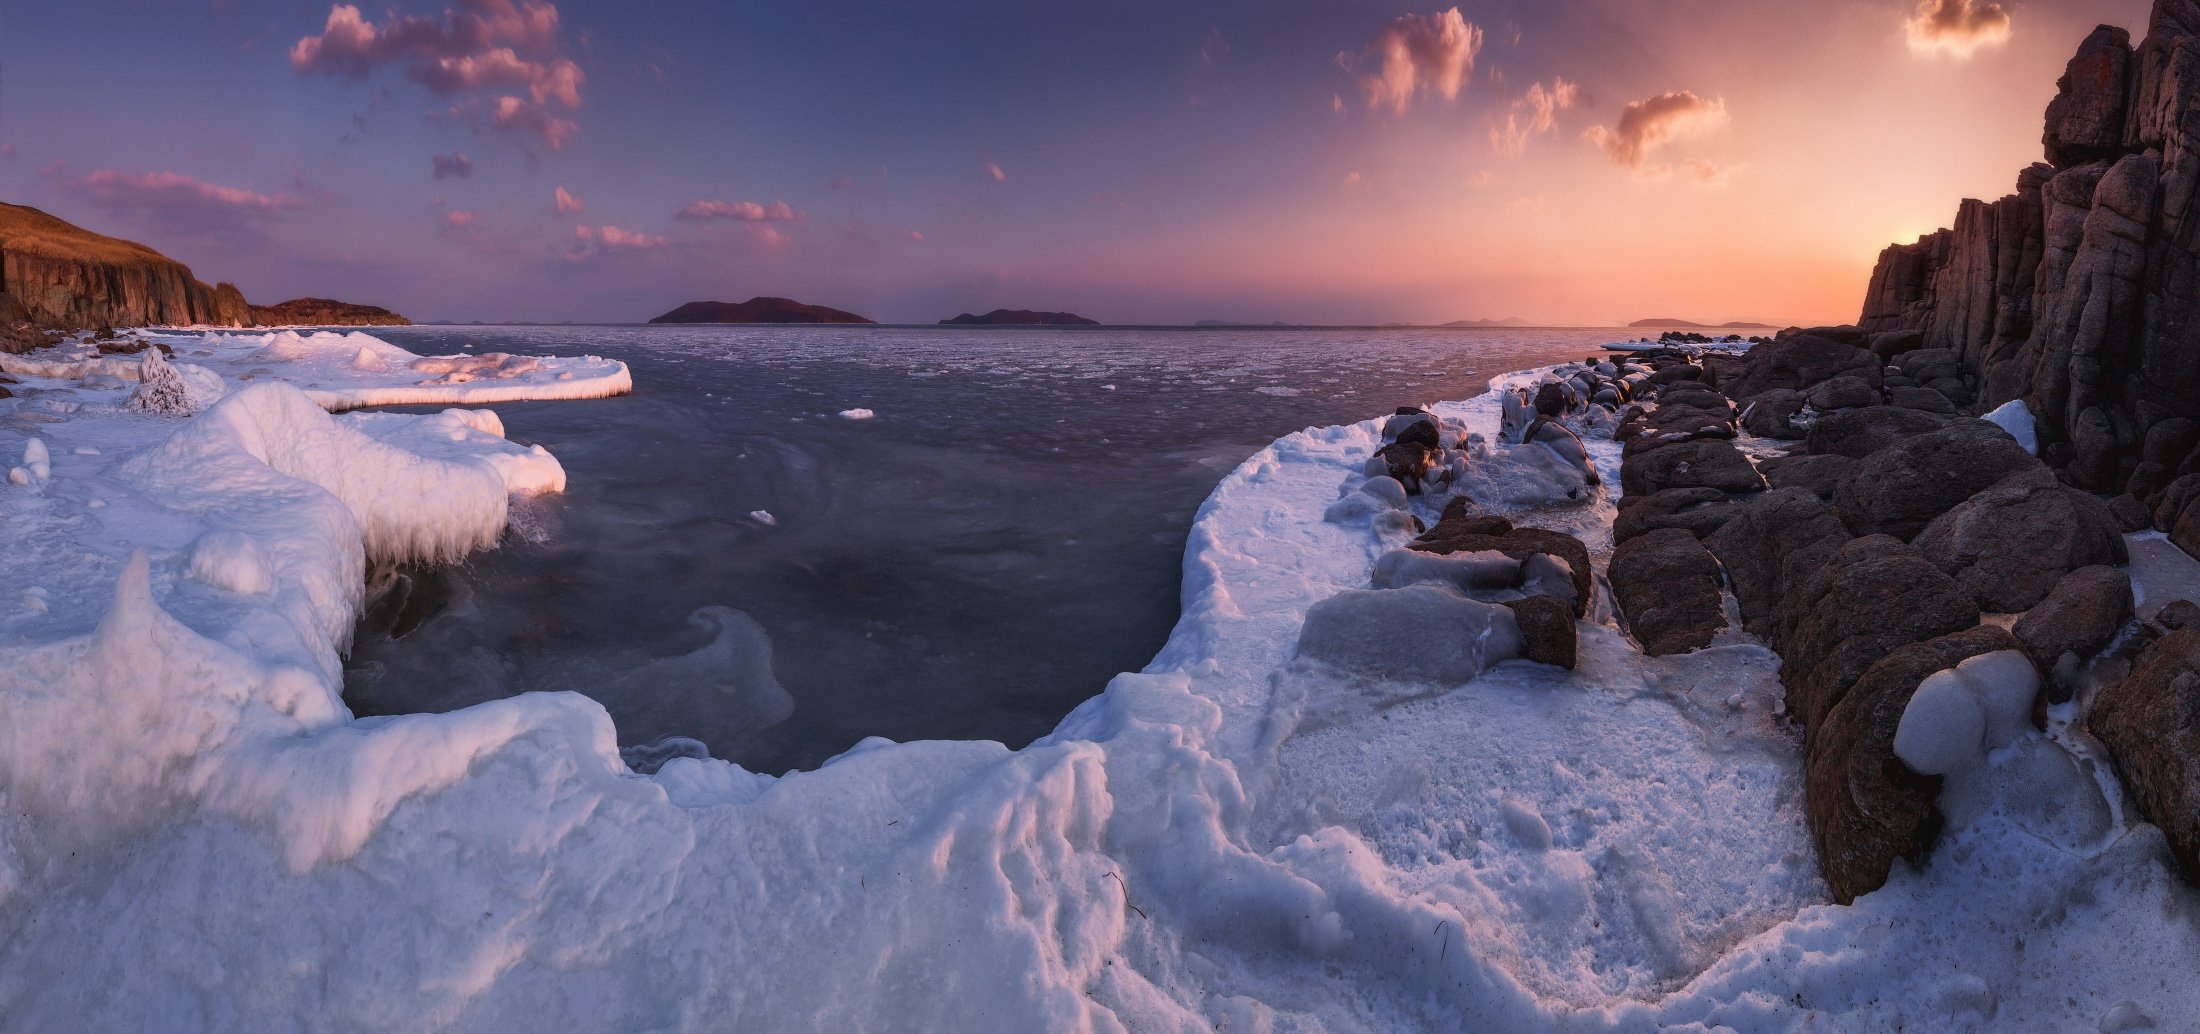 панорама, море, зима, лёд, скалы, Андрей Кровлин